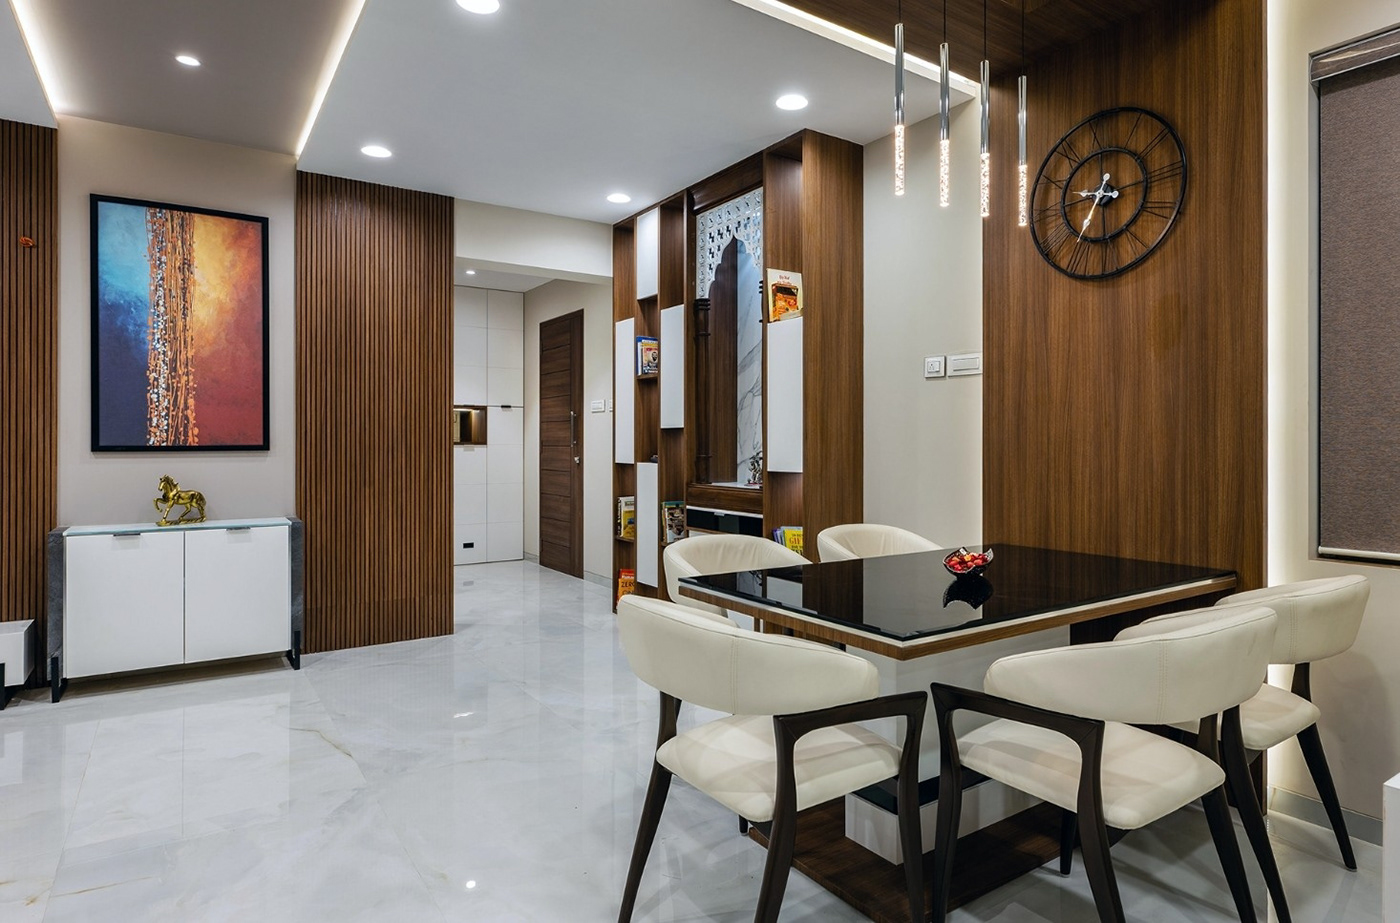 architecture elements of deign home decor interiordecor interiordesign wooden furniture